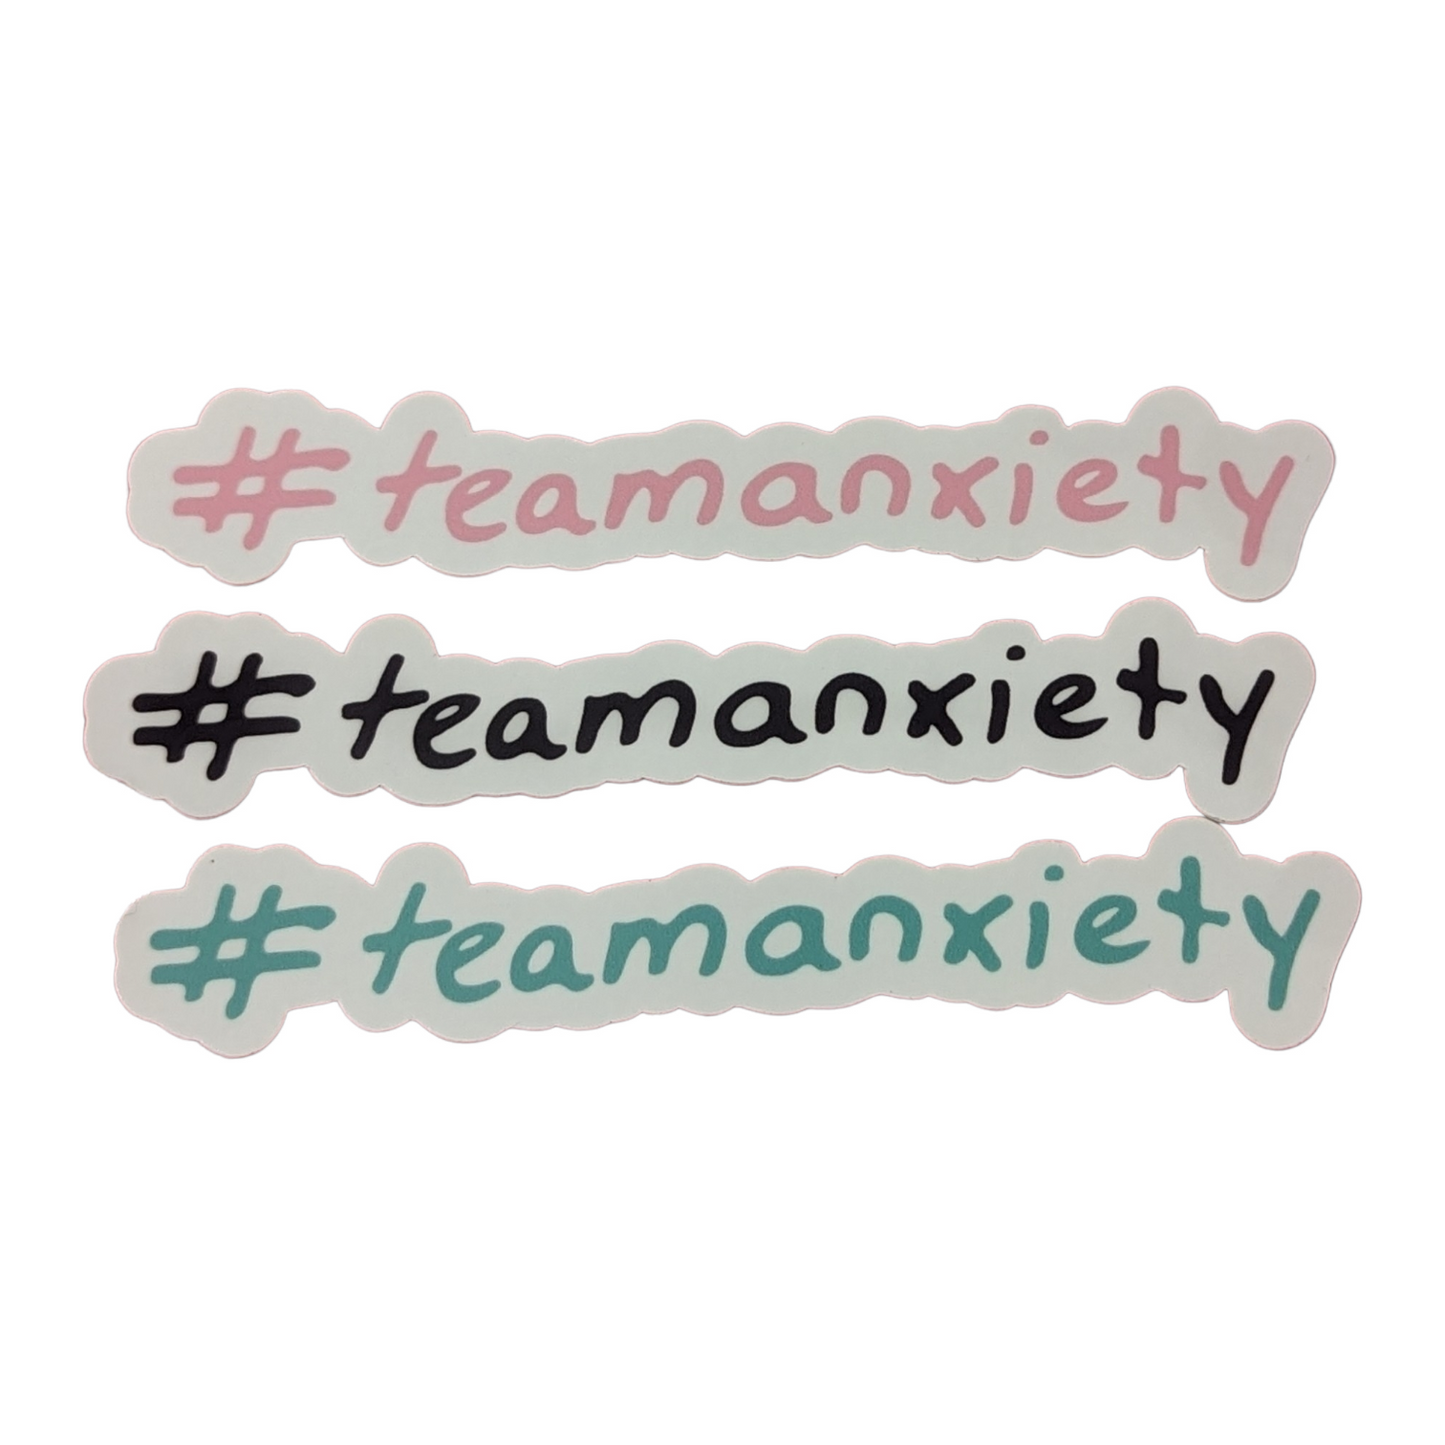 #teamanxiety stickers by manic pixie dream squirrel